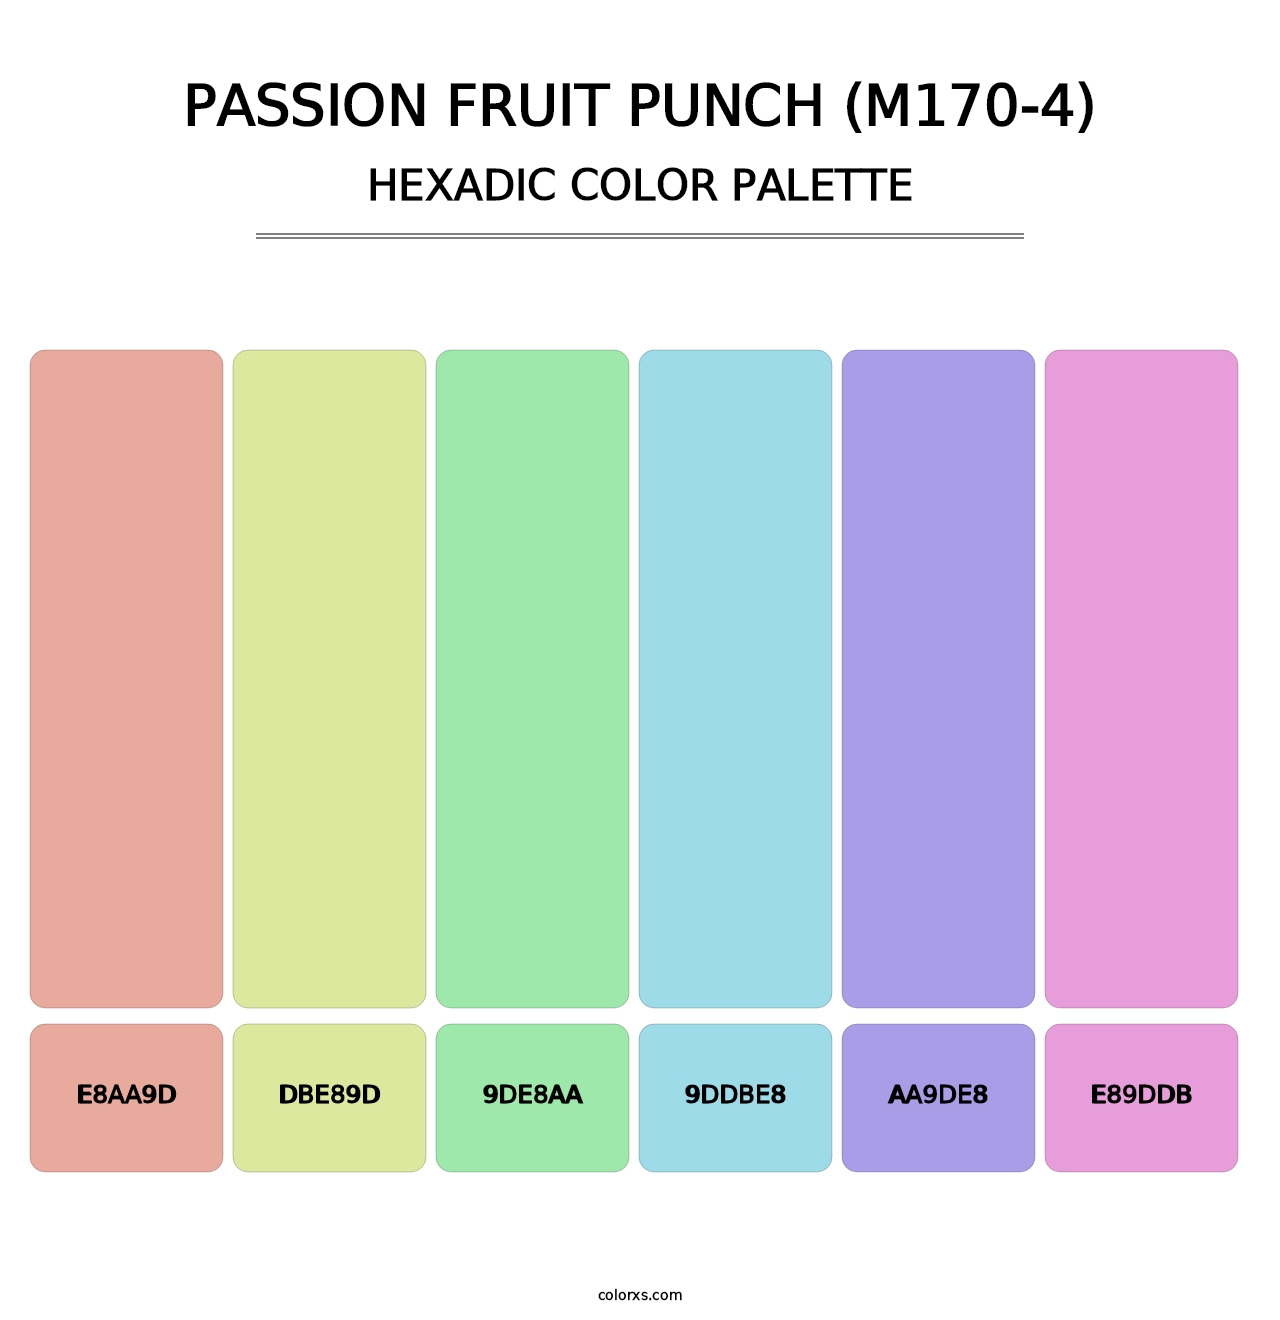 Passion Fruit Punch (M170-4) - Hexadic Color Palette